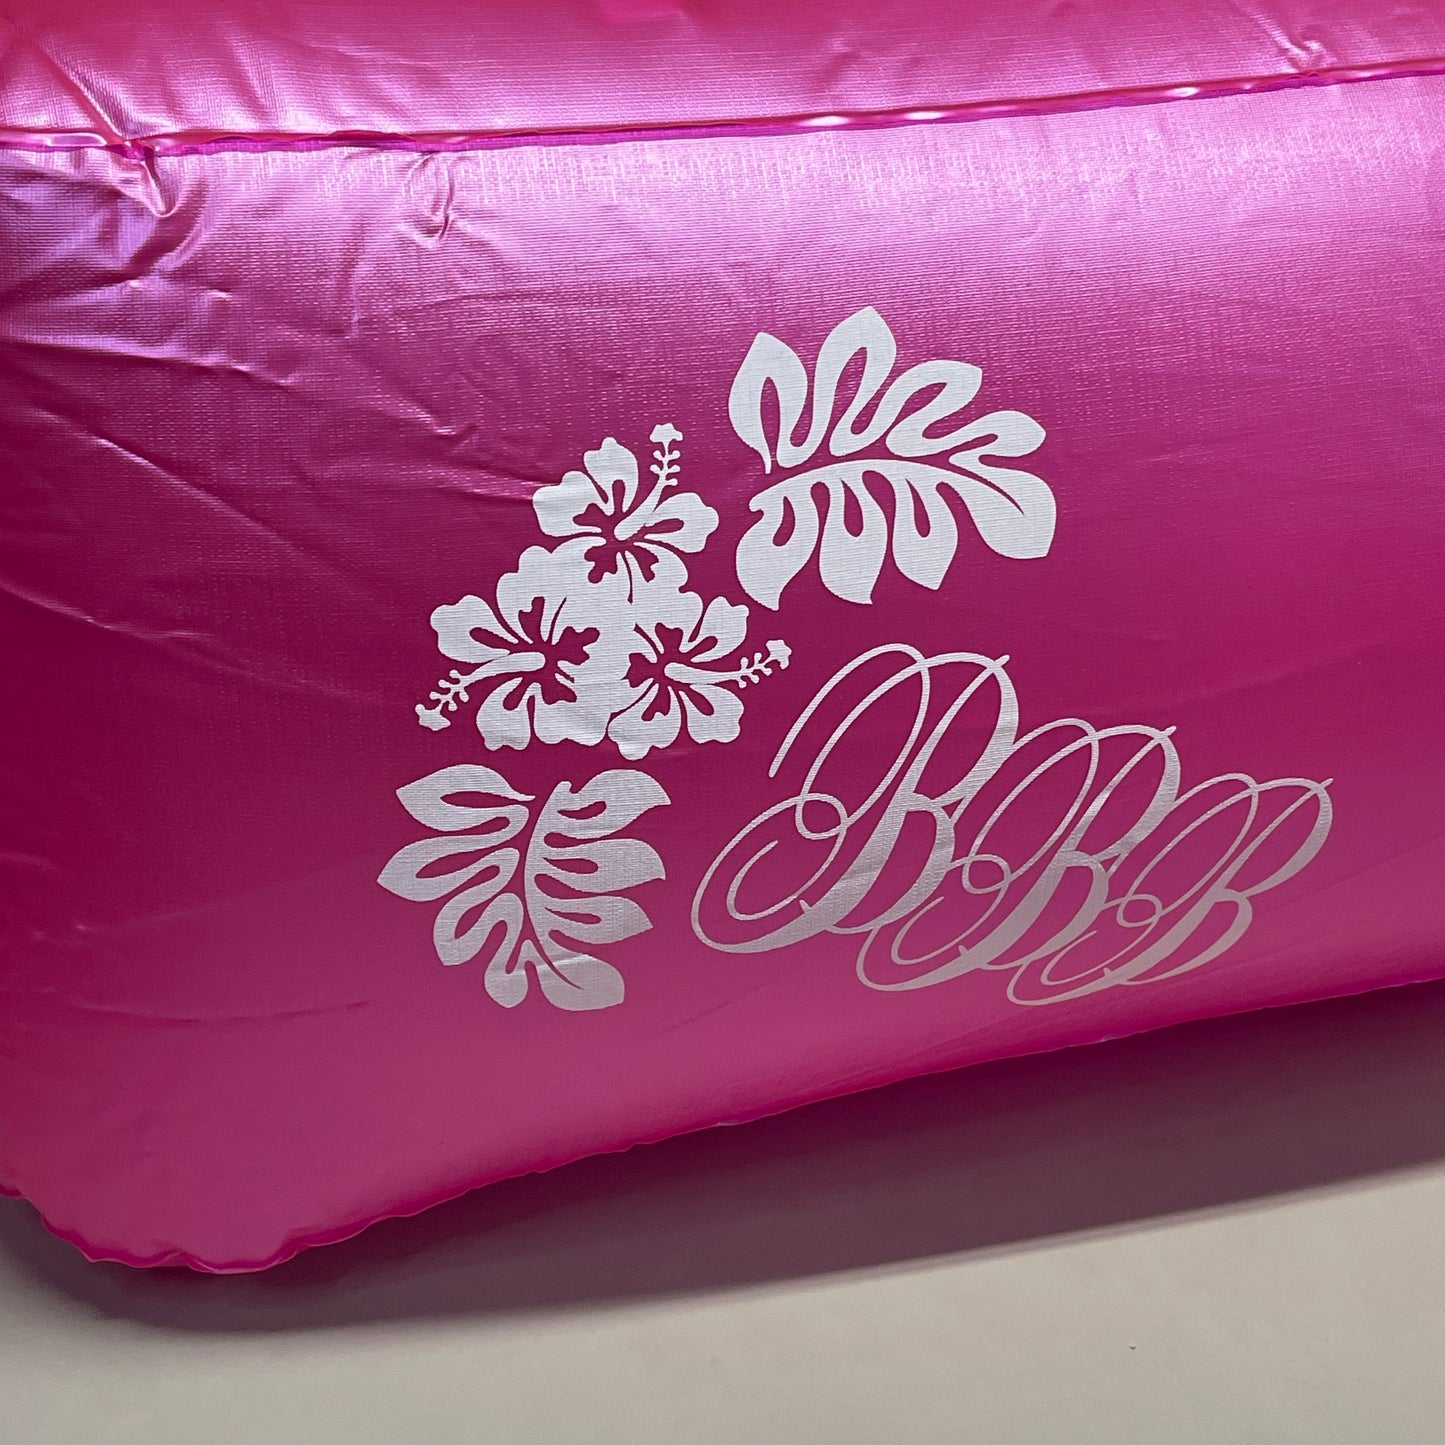 ZA@ BOOTY BEAN BAG BBL Small Inflatable Air Mattress Pink 22" Square (New)